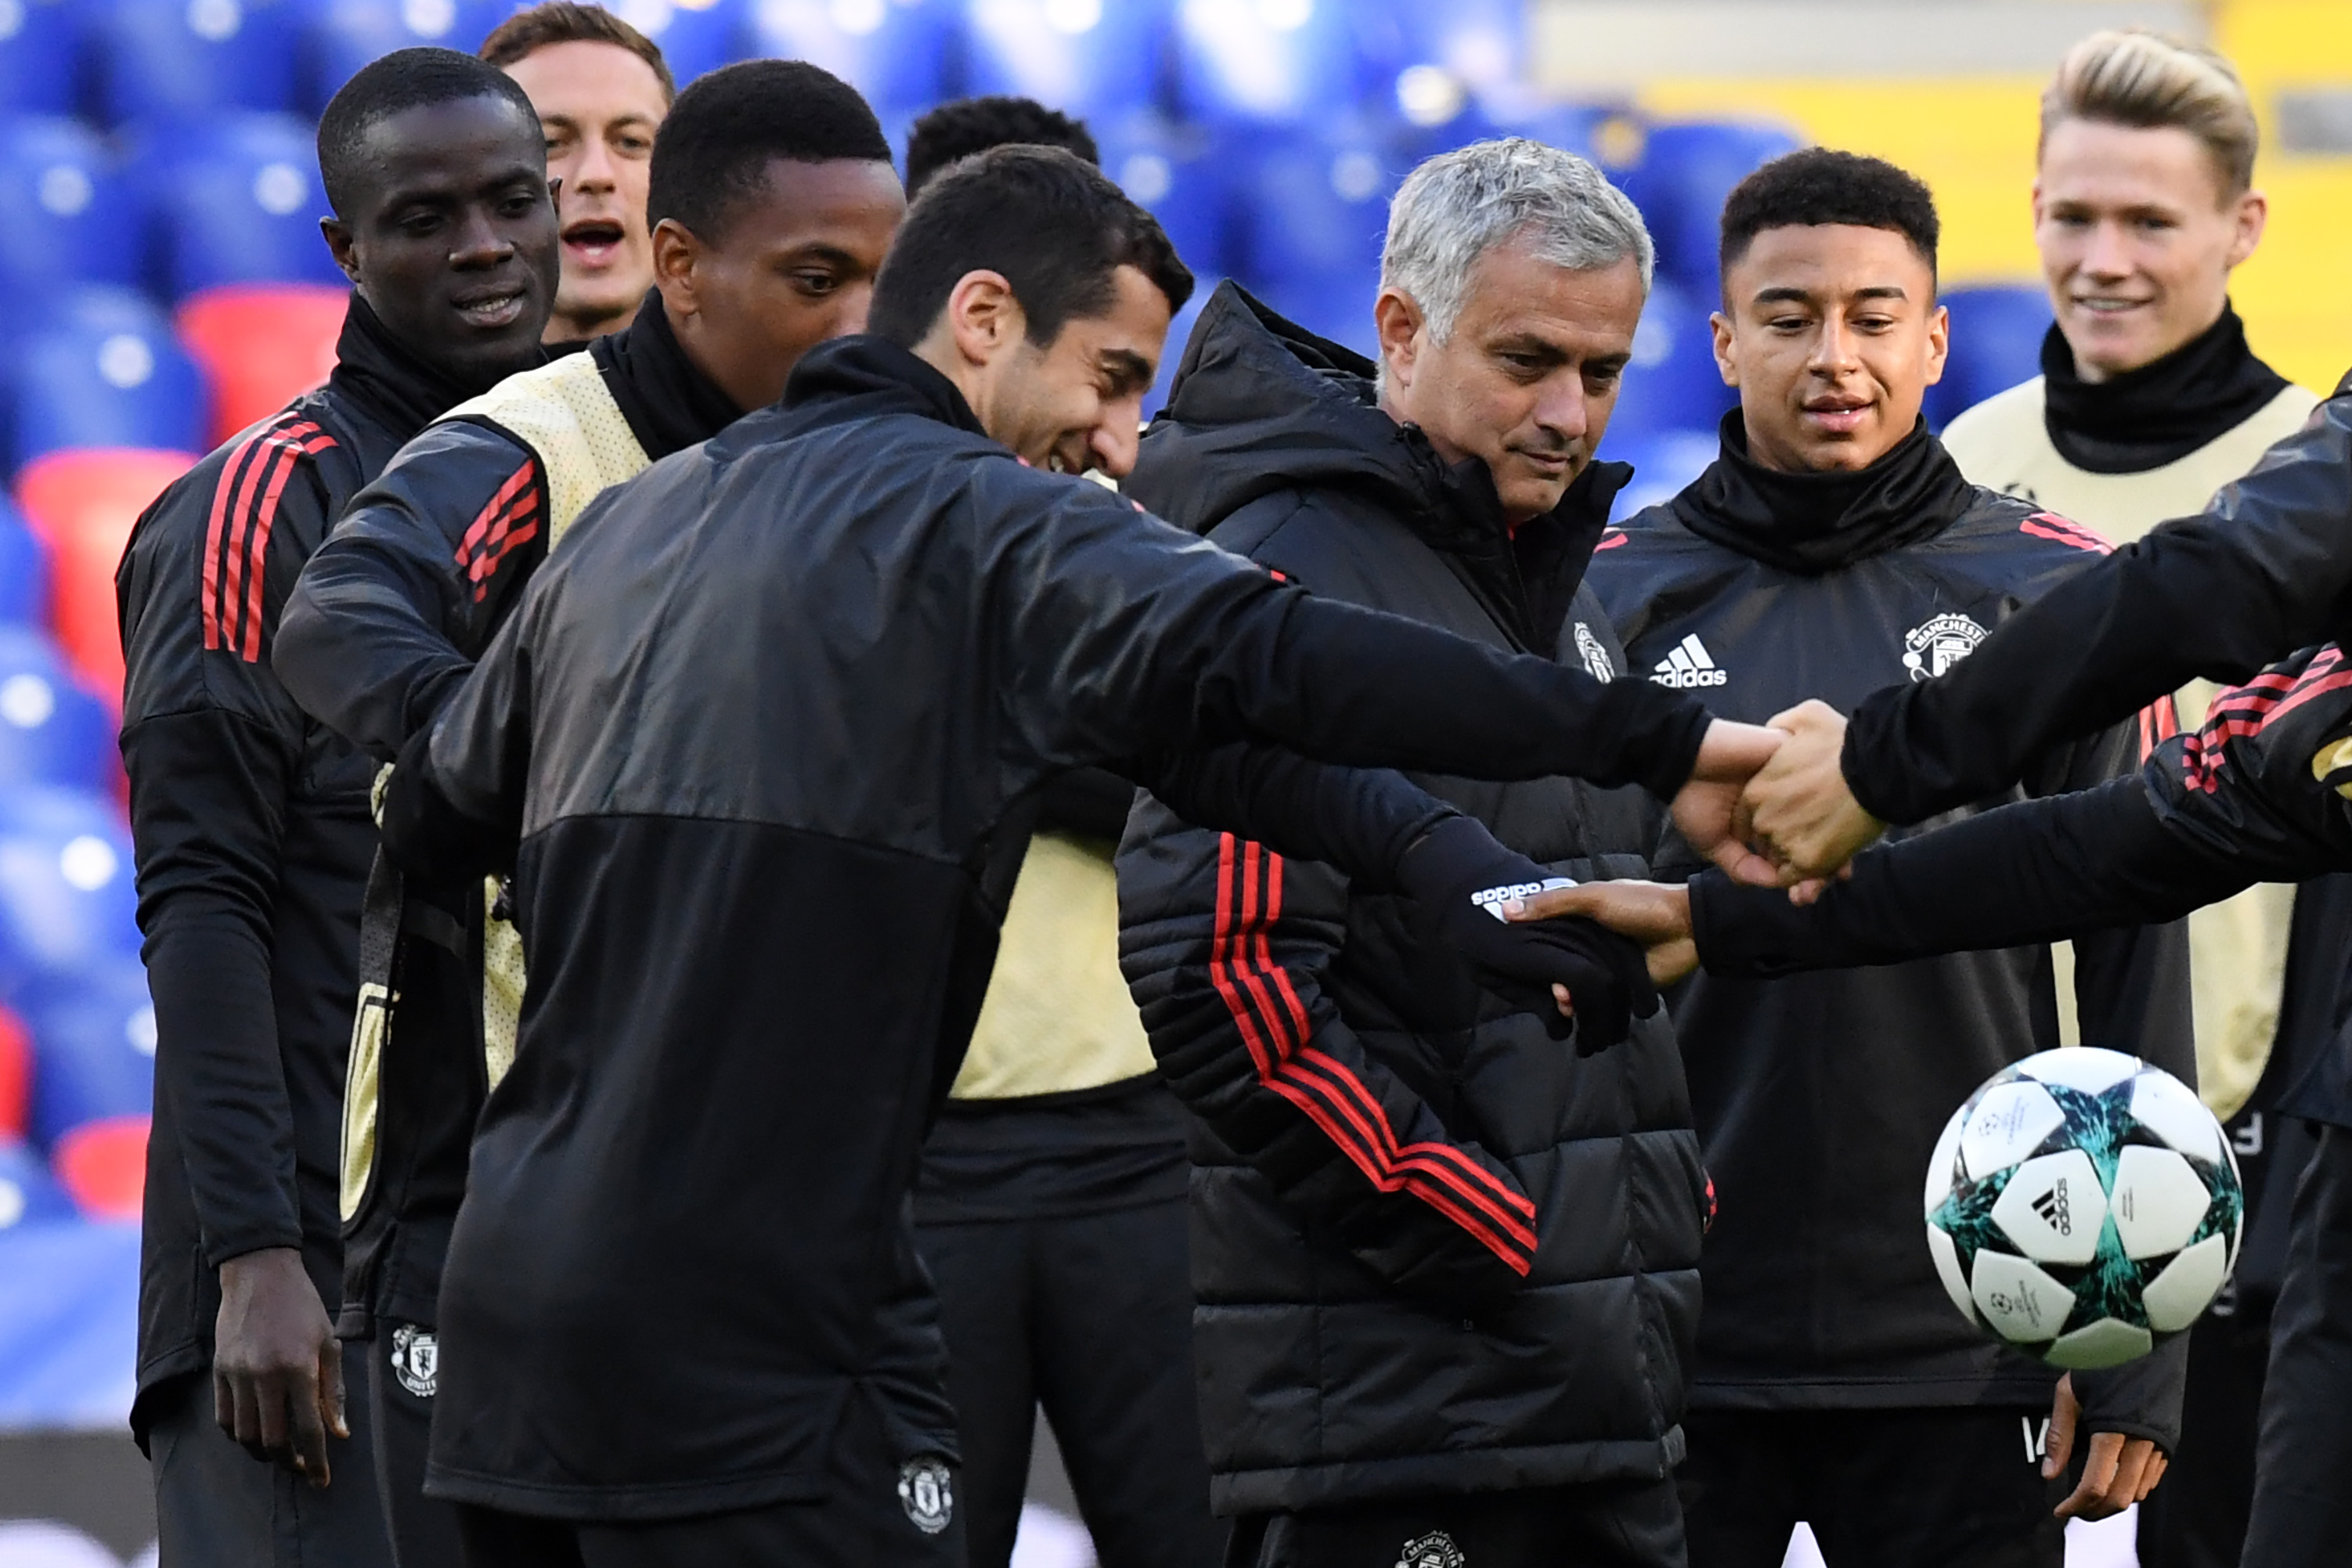 Lingard's best moments in a Manchester United shirt came under Jose Mourinho / AFP PHOTO / Kirill KUDRYAVTSEV        (Photo credit should read KIRILL KUDRYAVTSEV/AFP/Getty Images)